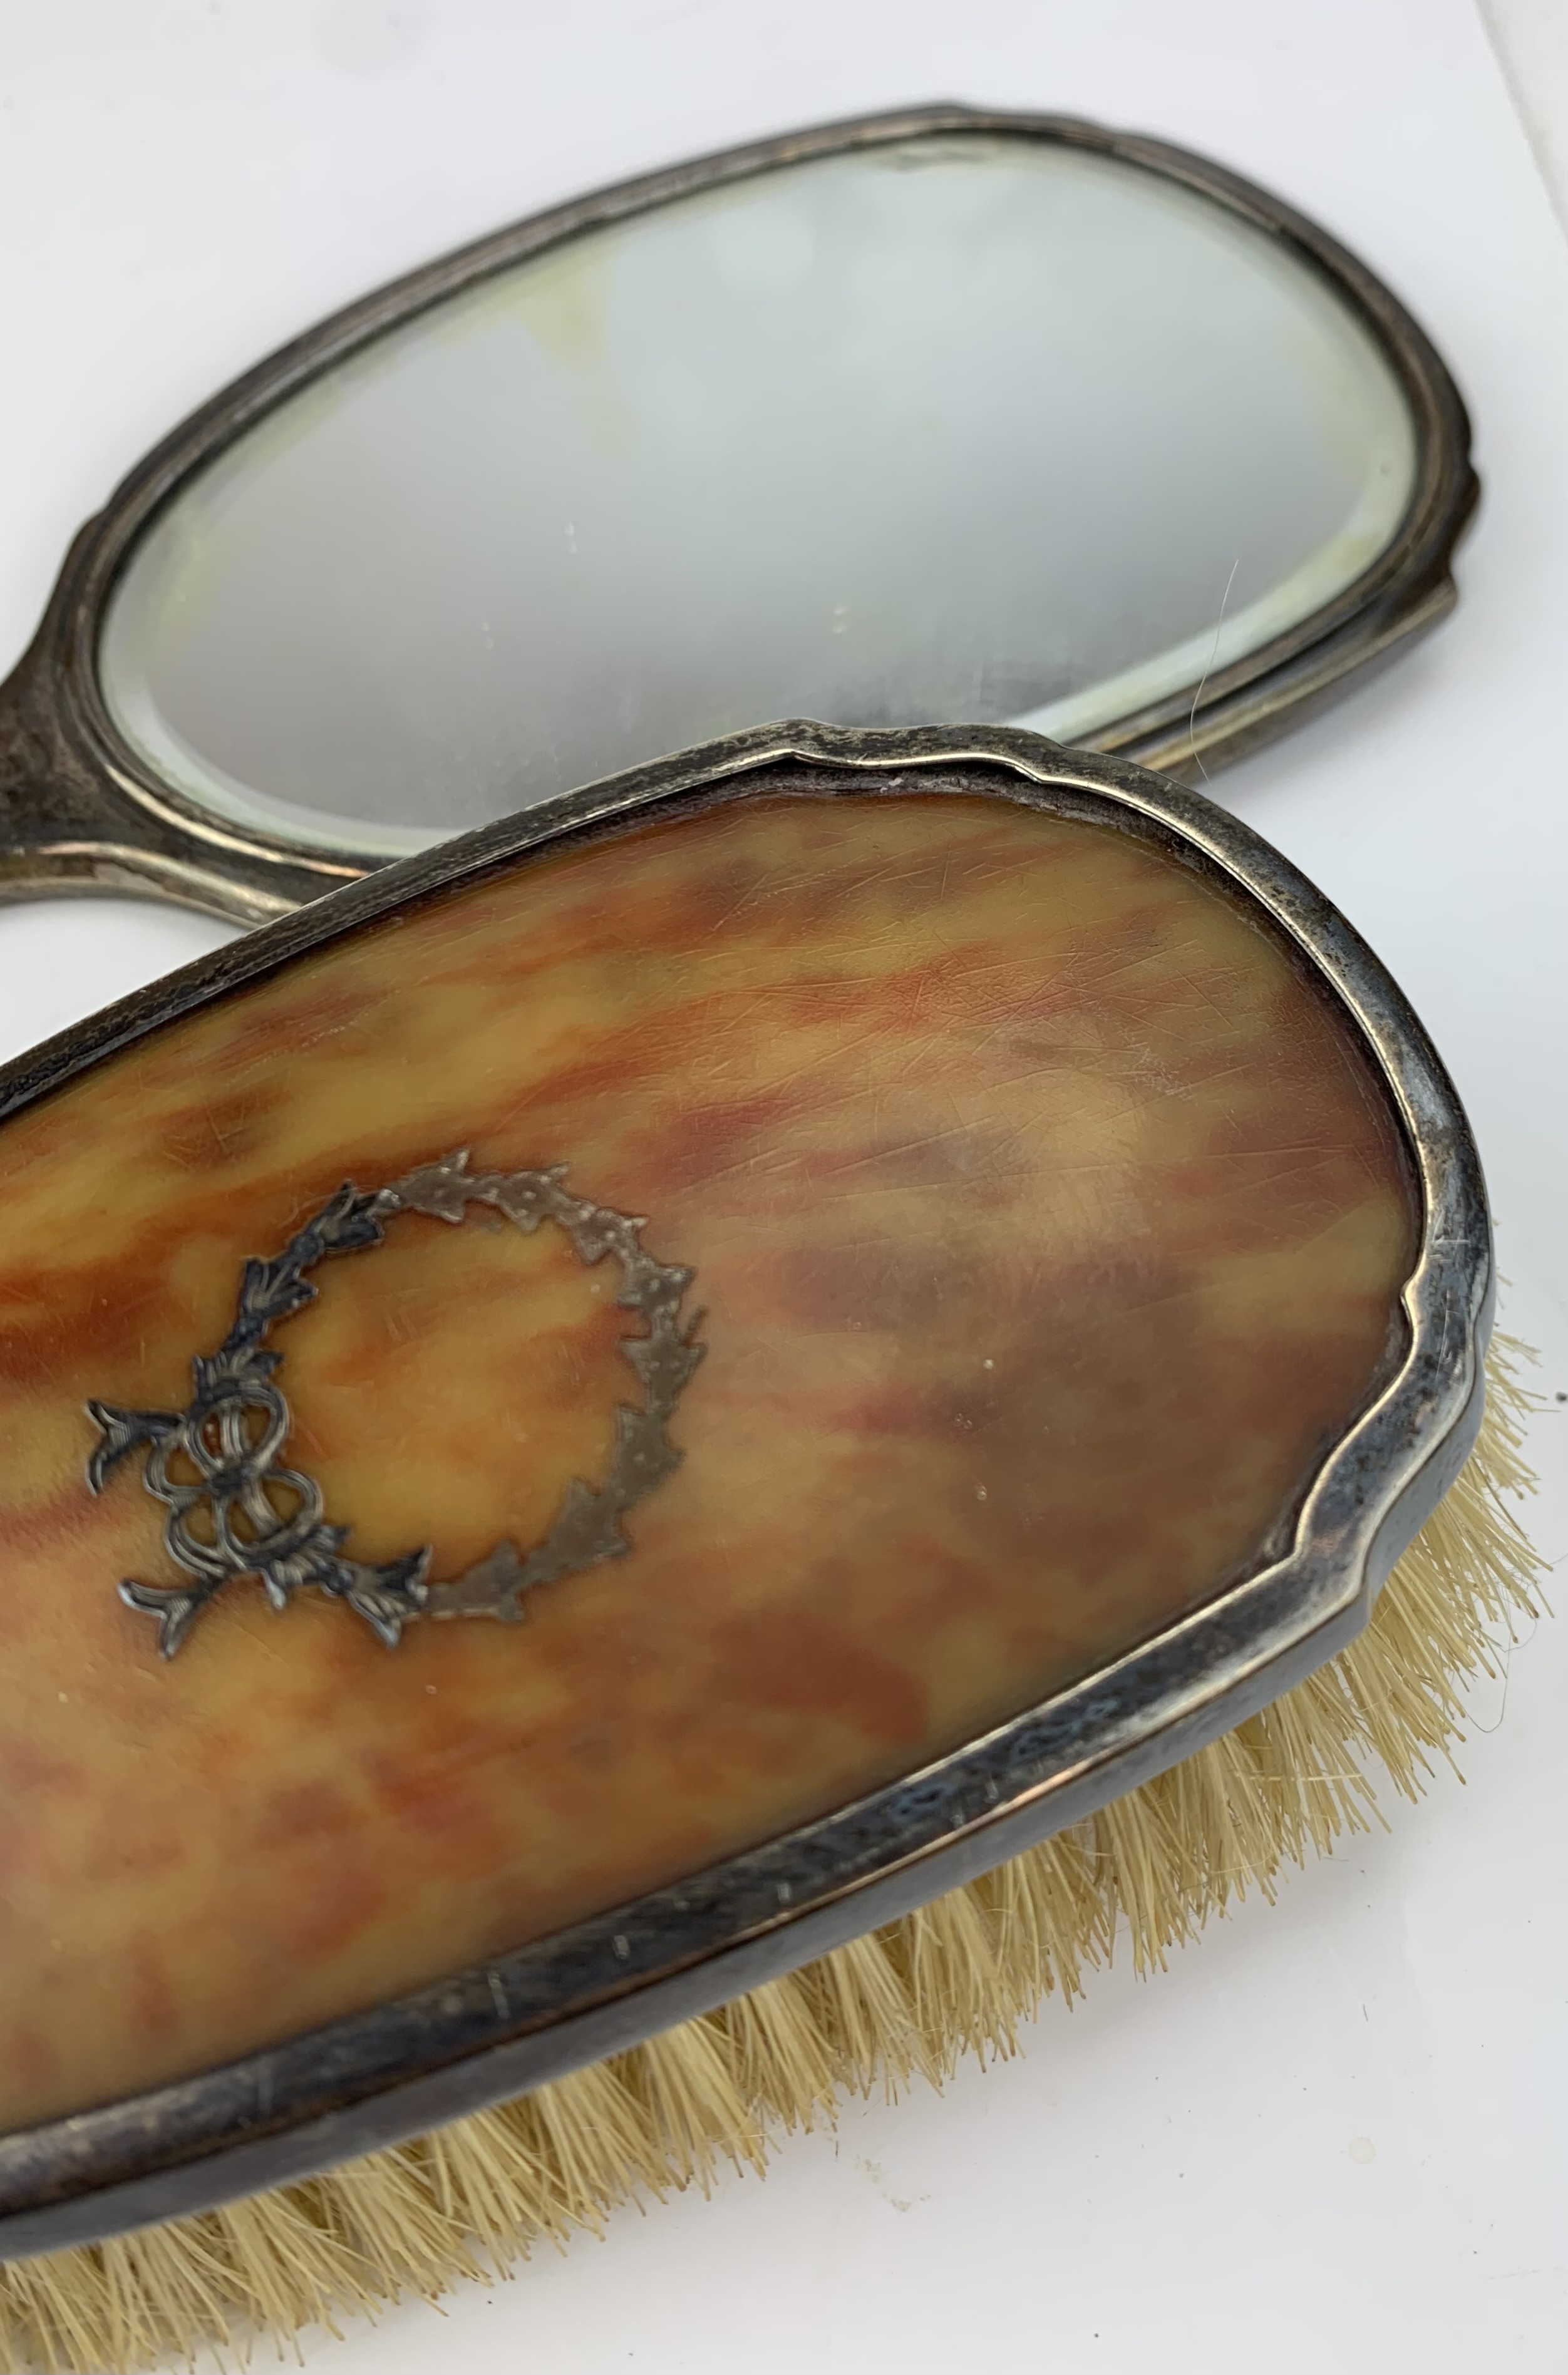 Silver/tortoiseshell backed hairbrush & hand mirror - Image 3 of 3